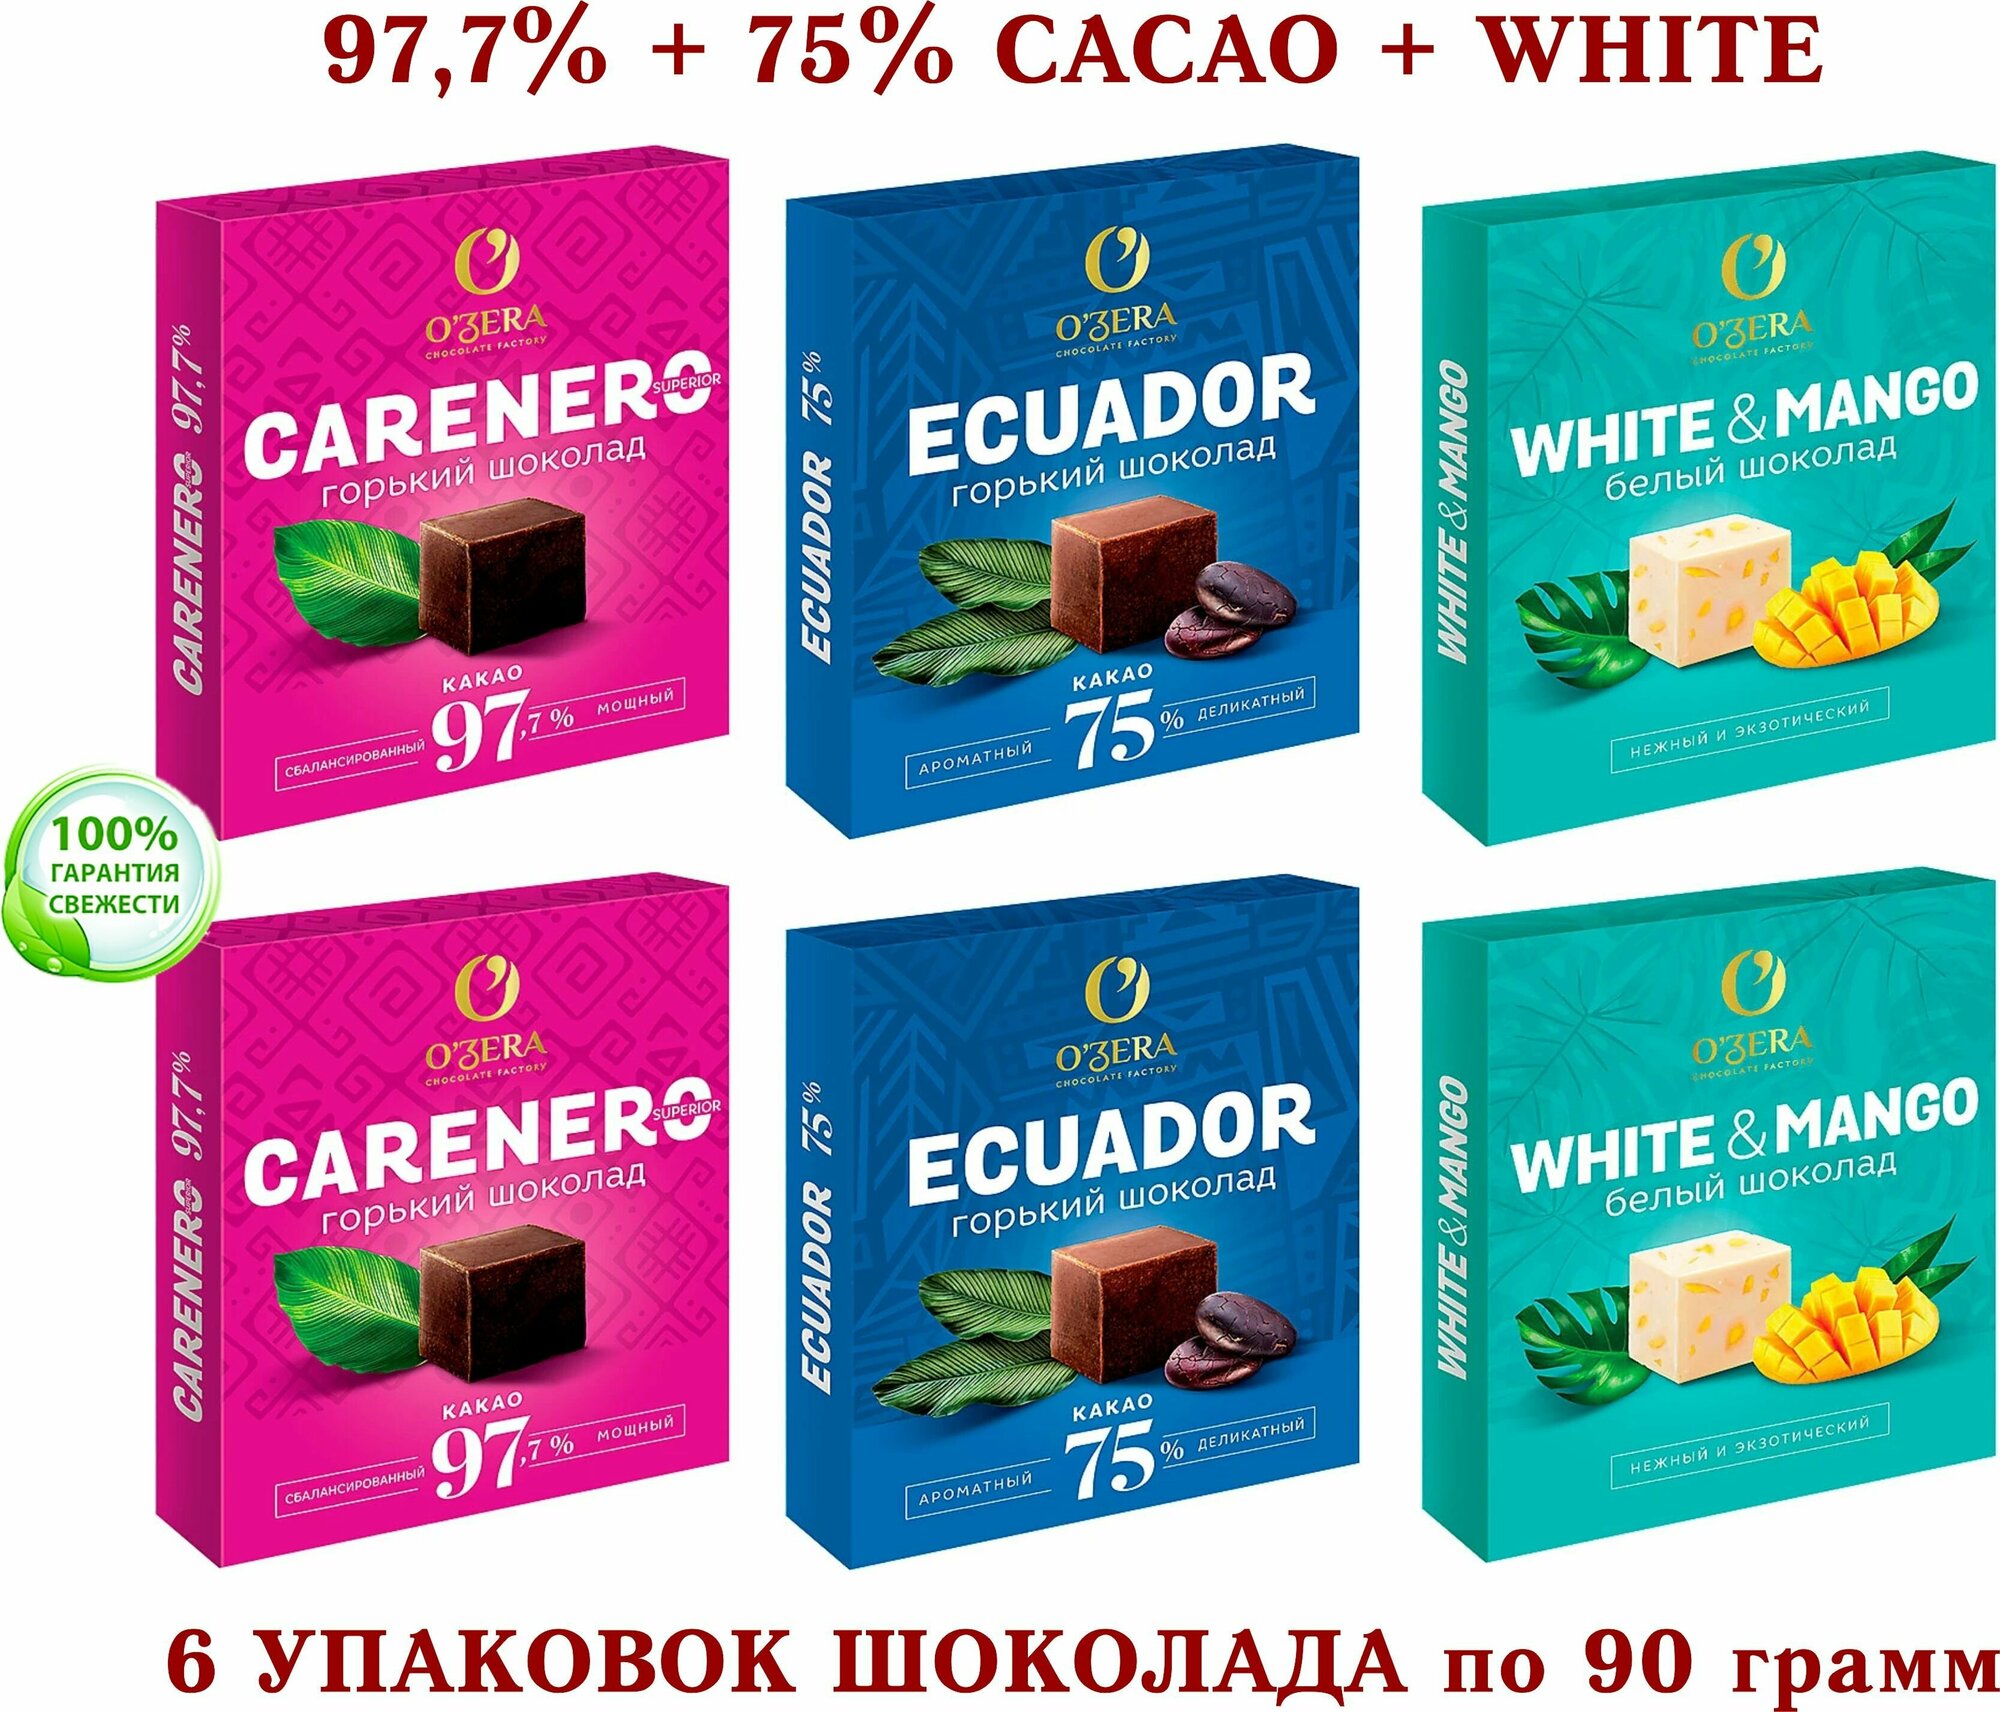 Шоколад OZera ассорти - Carenero SuperioR горький 97,7%+EcuadorR 75%+белый с Манго OZera WHITE & MANGO-Озерский сувенир-KDV-6*90 грамм